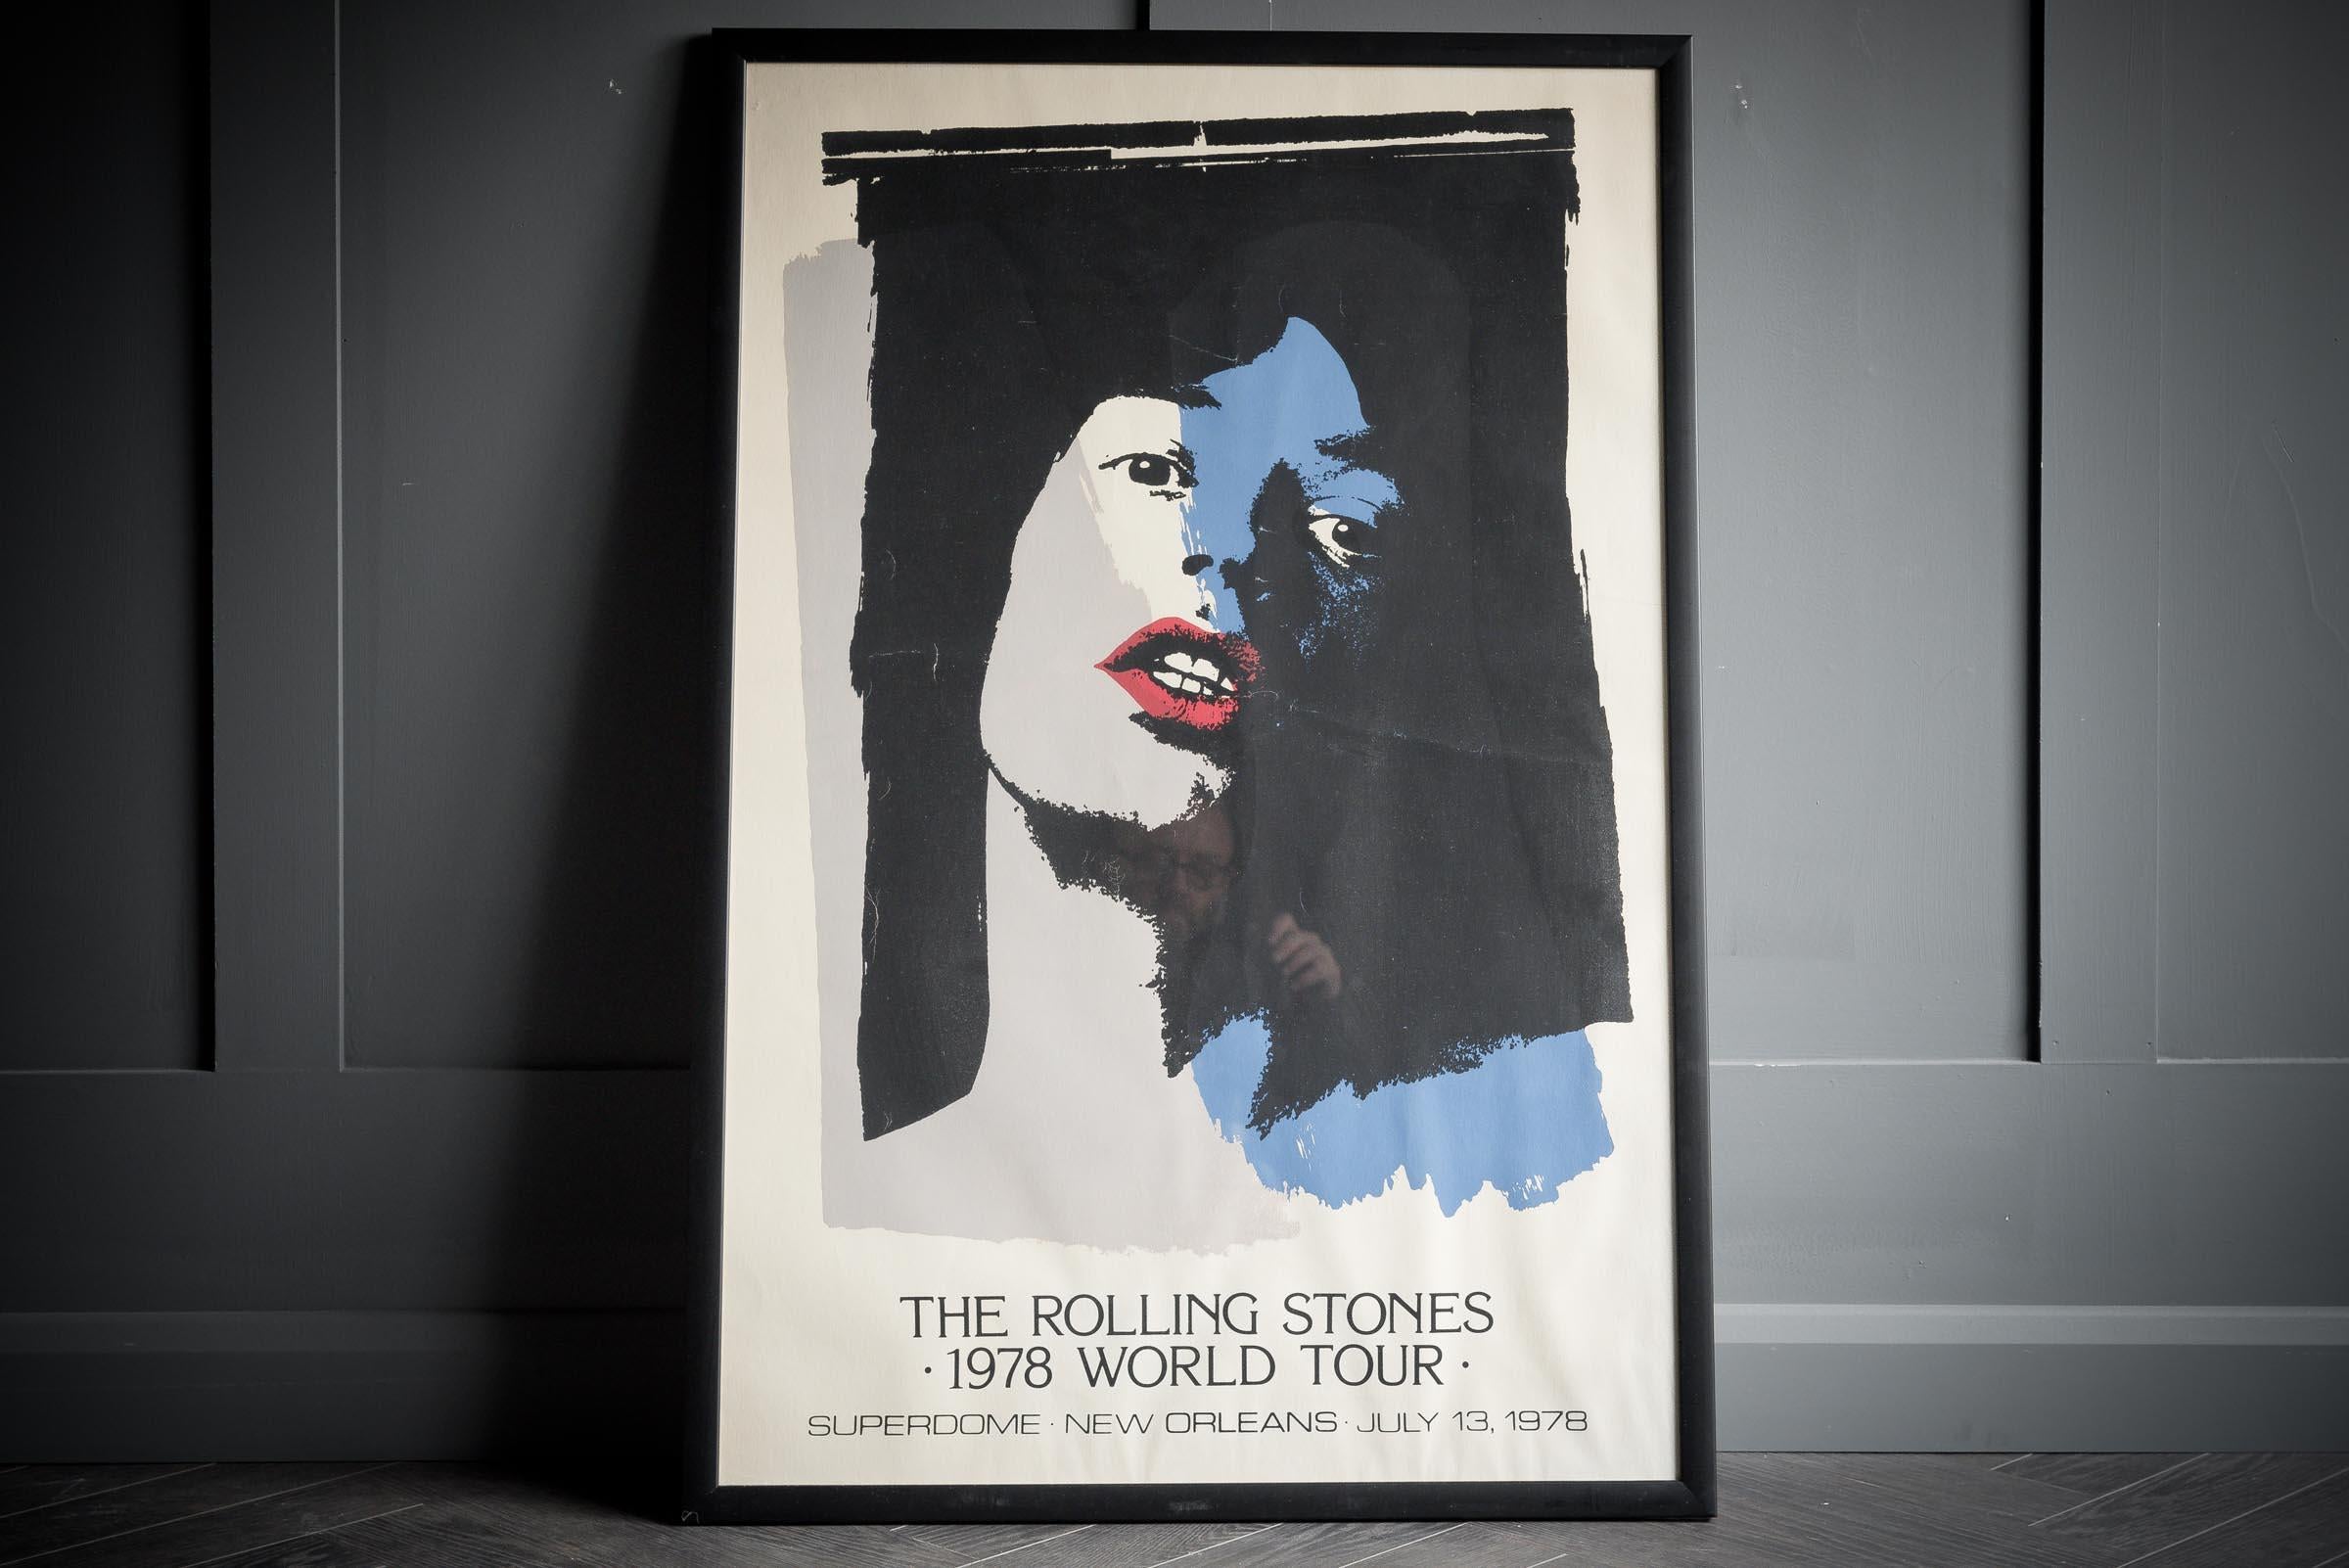 Original 1978 rolling stones world tour poster.